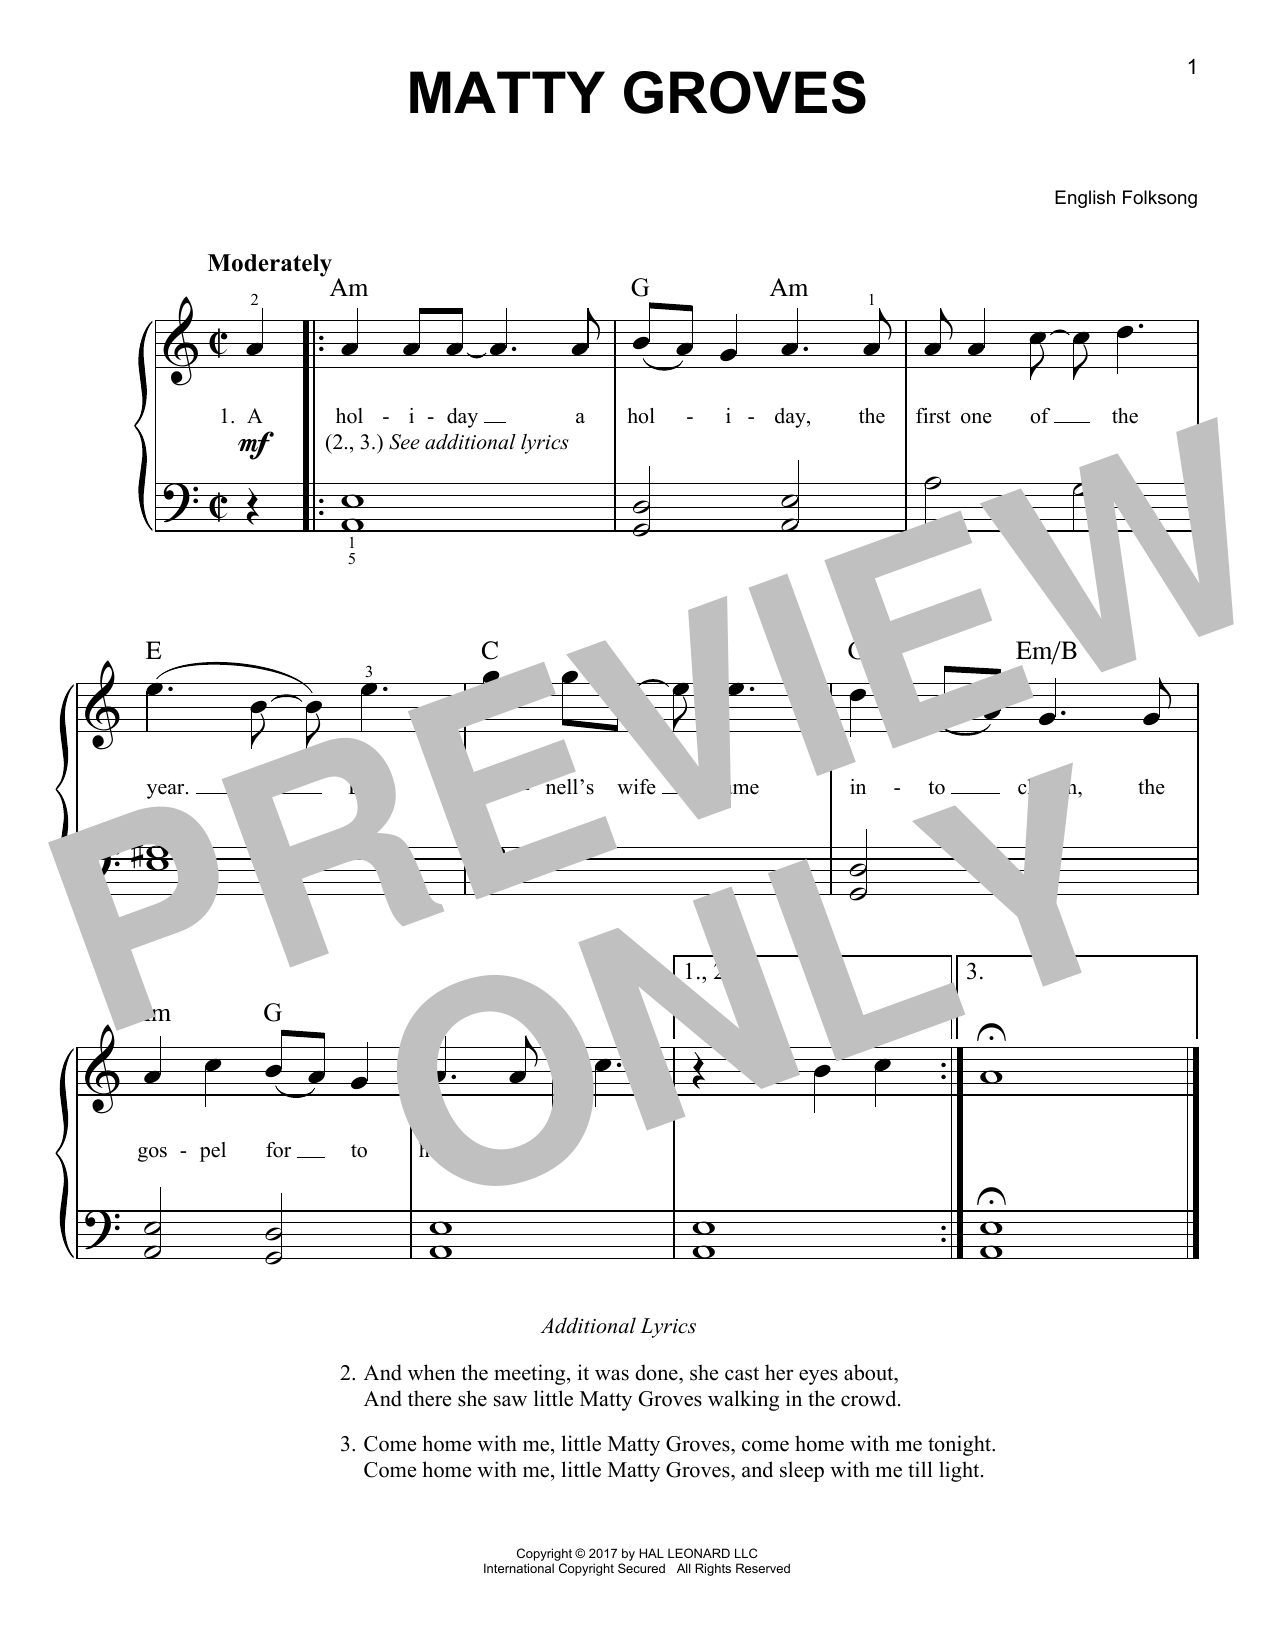 Download English Folksong Matty Groves Sheet Music